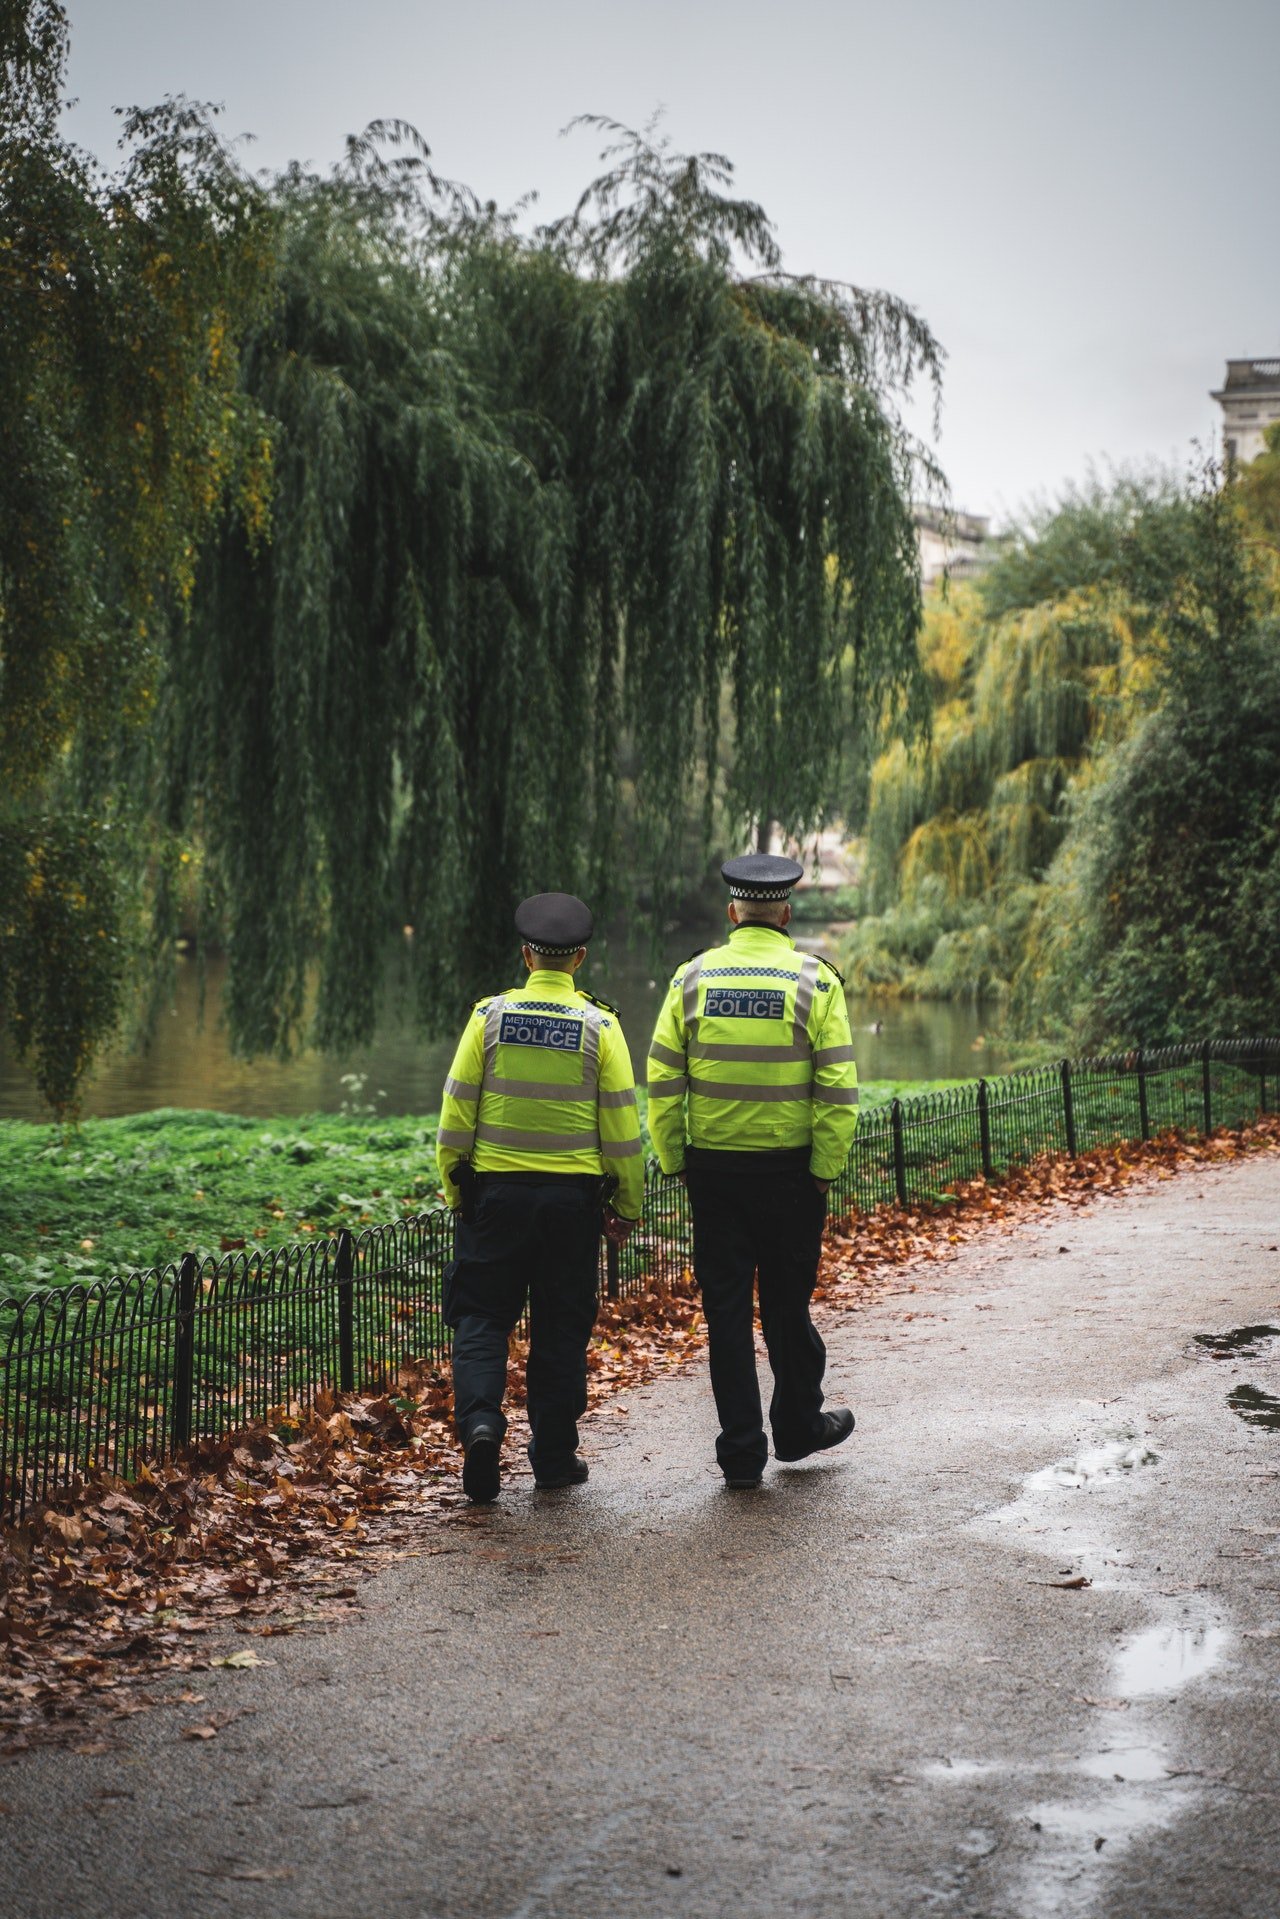 Two policemen walking down the road | Photo: Pexels